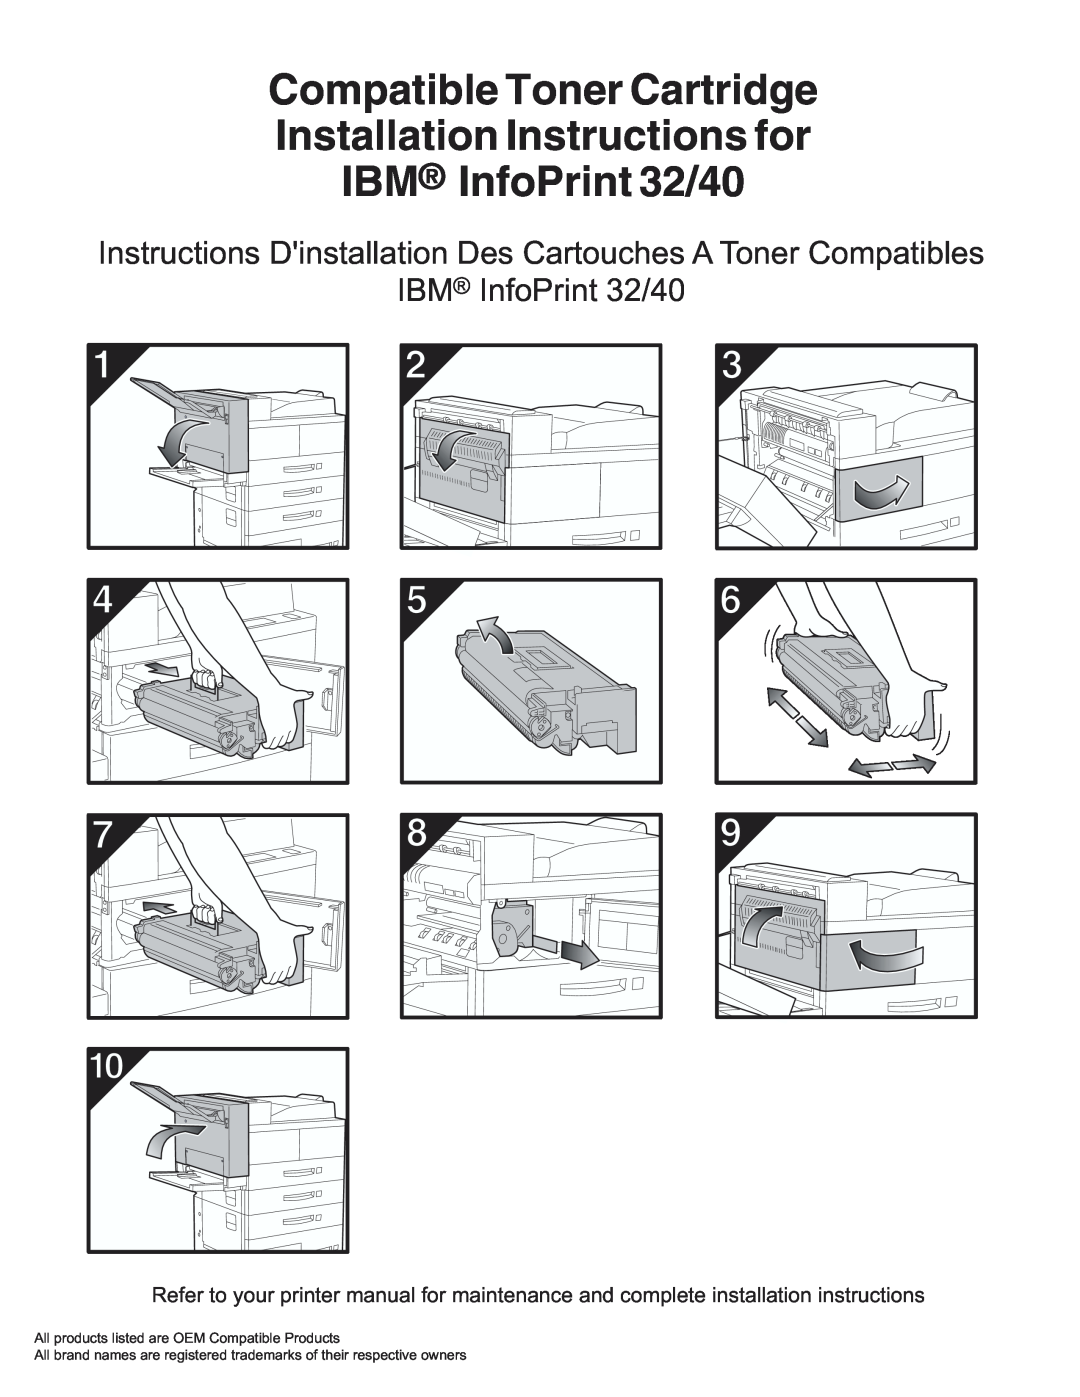 IBM installation instructions Compatible Toner Cartridge, Installation Instructions for IBM InfoPrint 32/40 